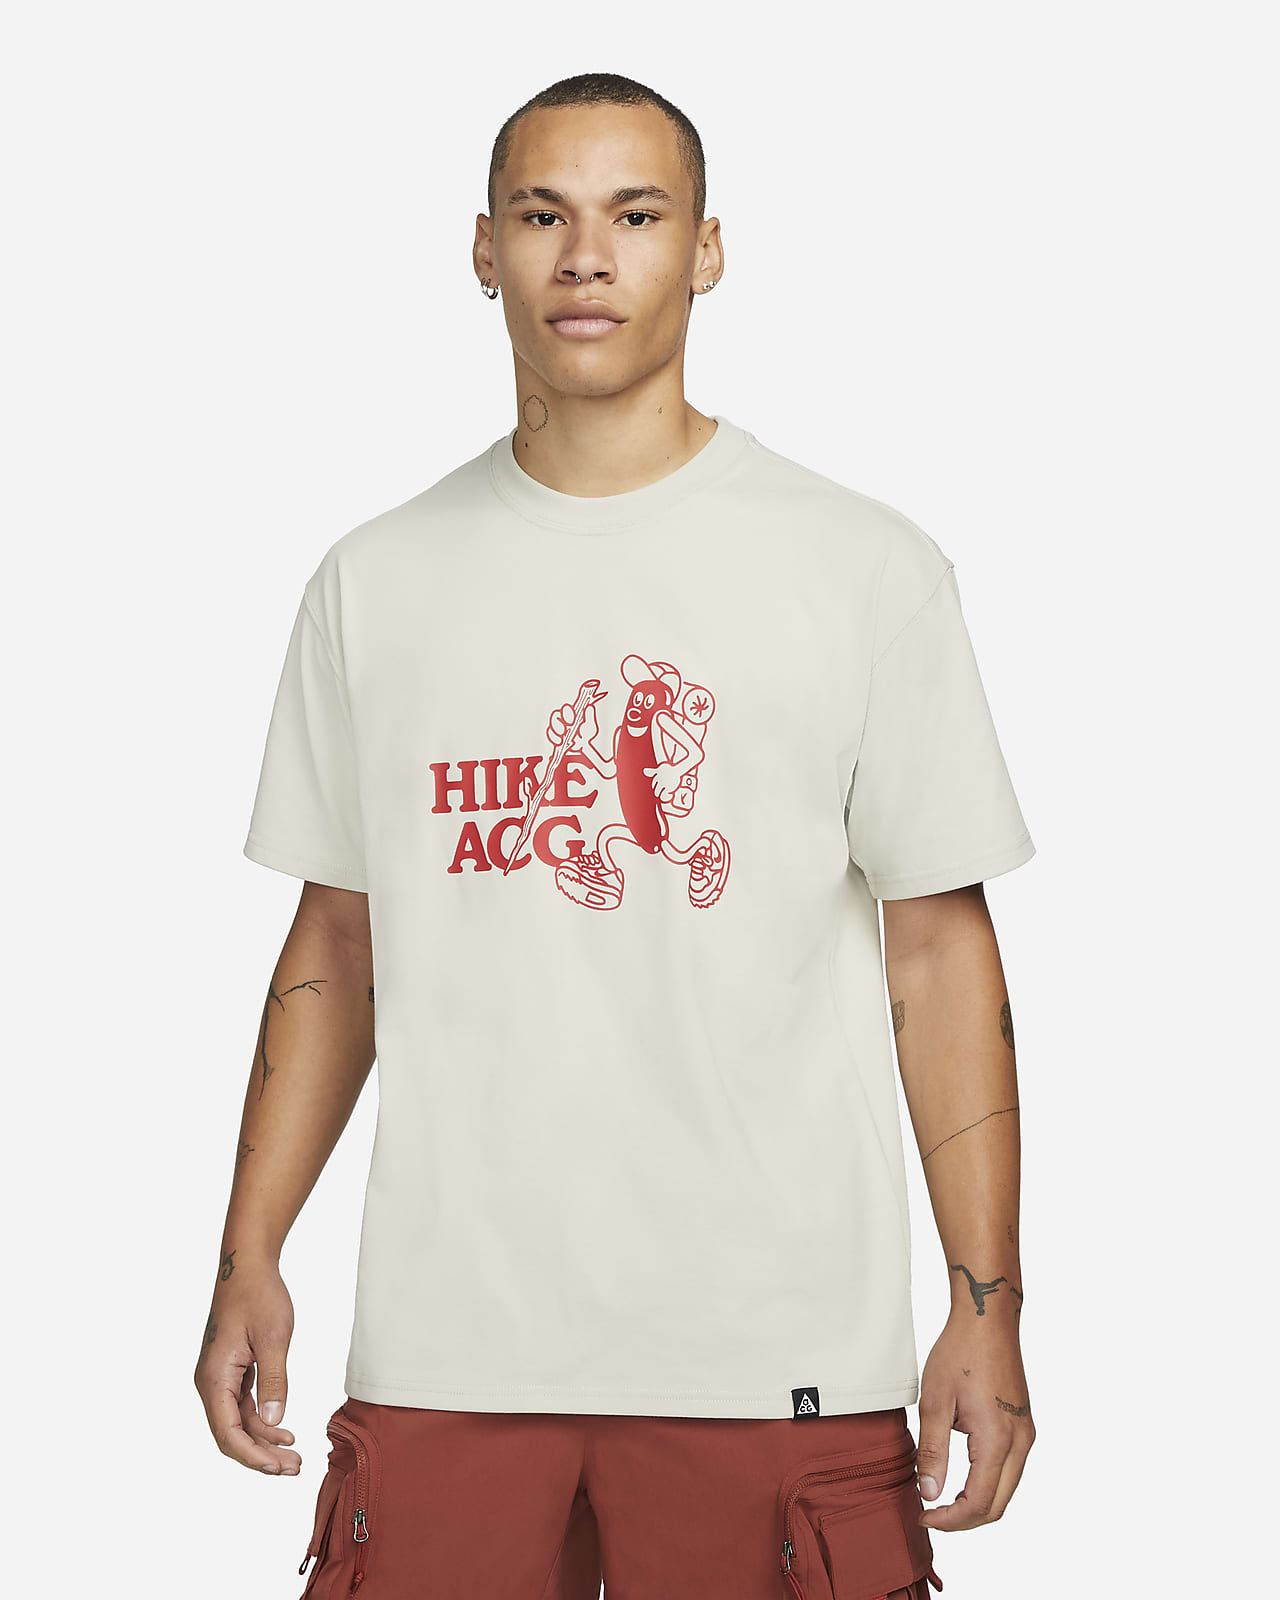 Nike ACG "Hike" Herren-T-Shirt